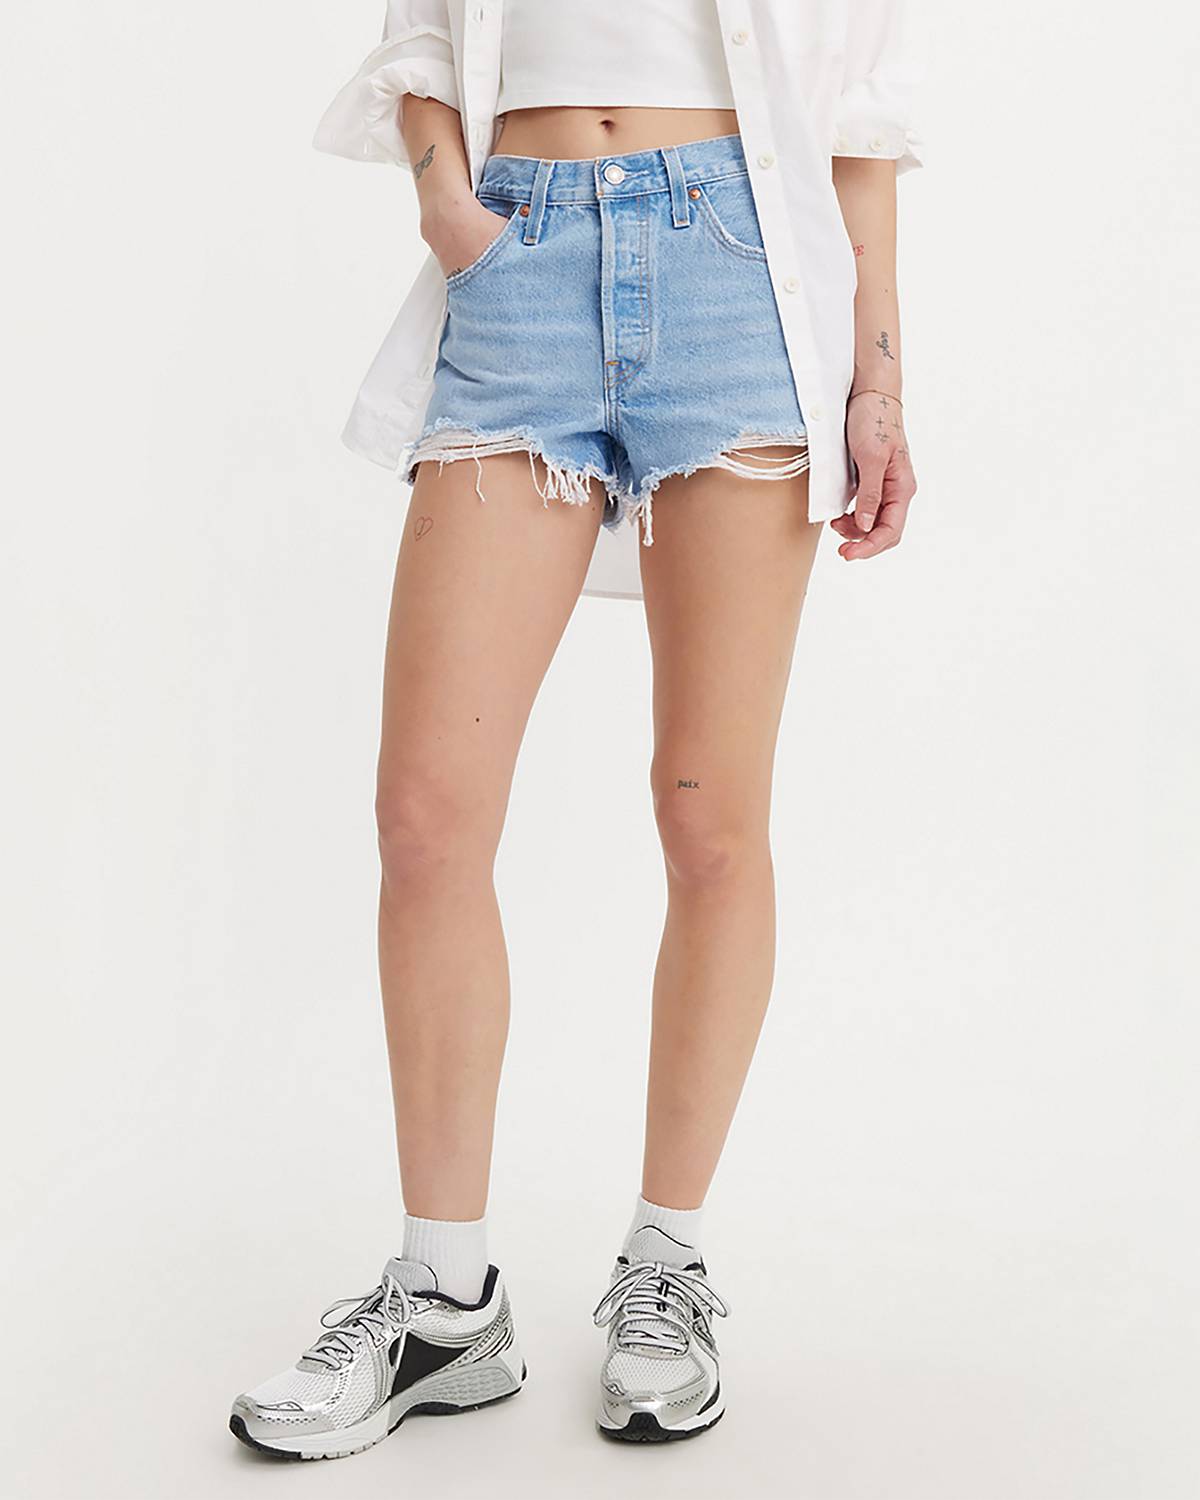 Model wearing 501® shorts